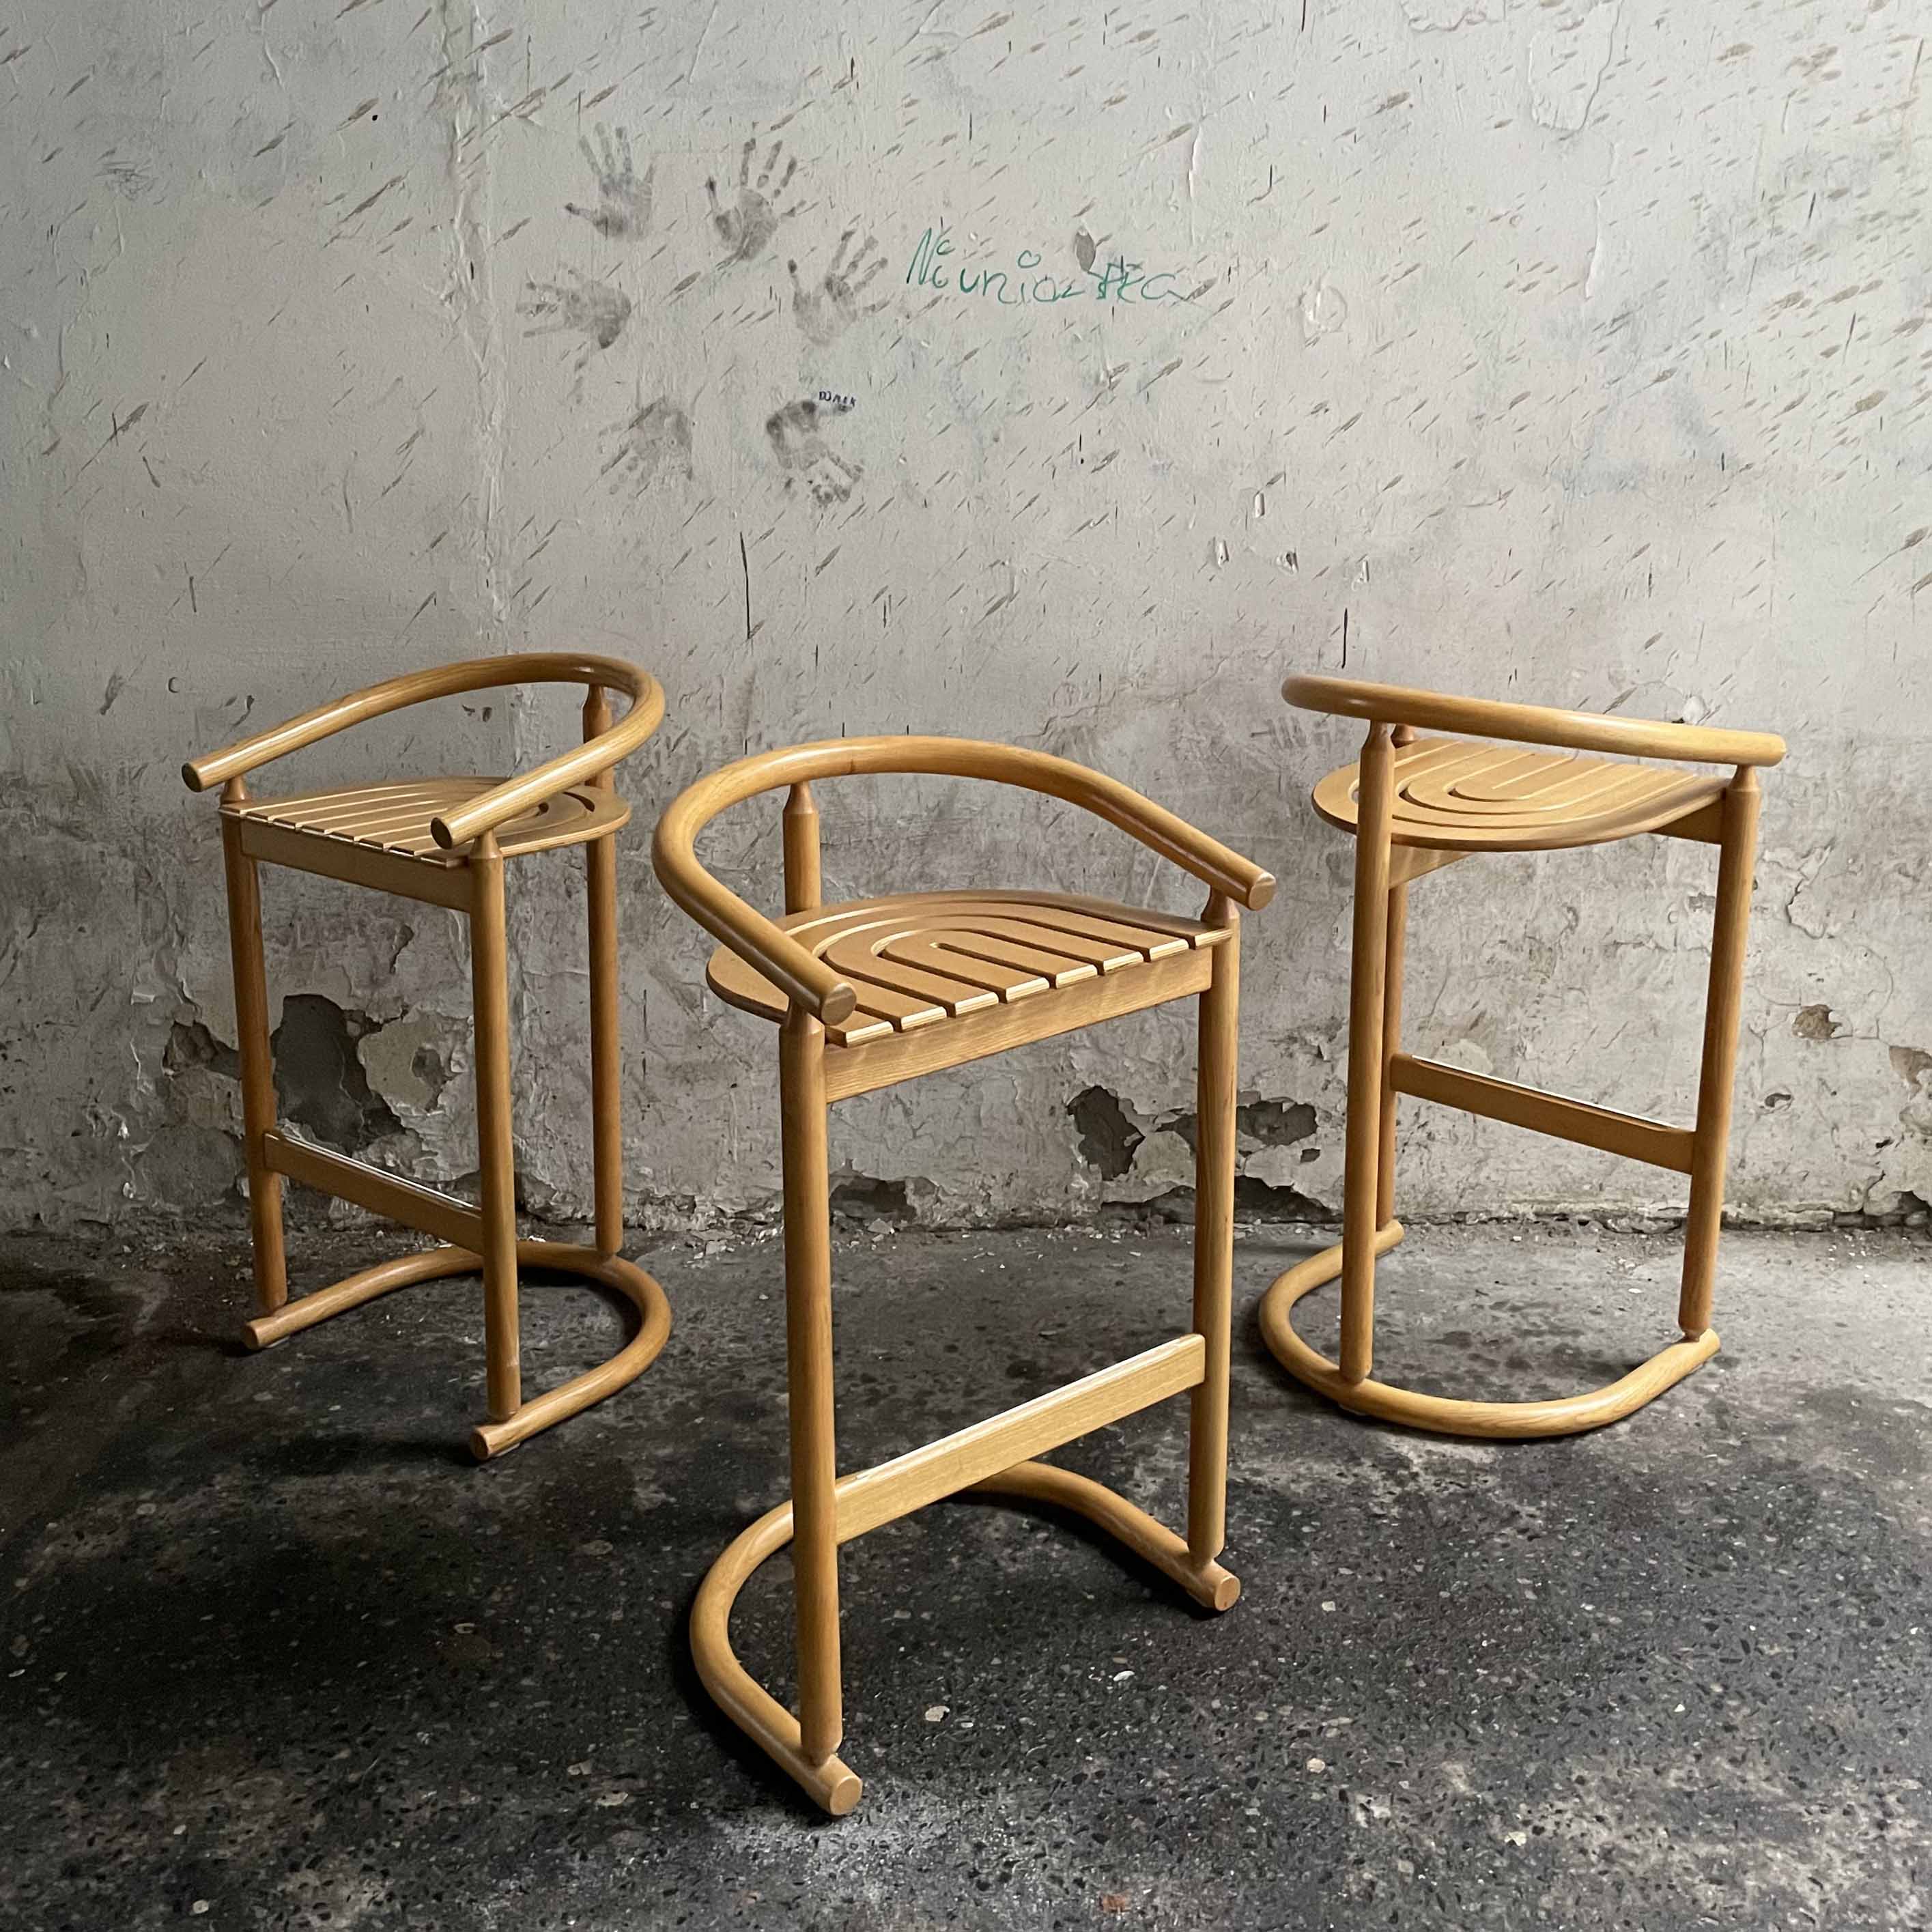 Bentwood Chairs by Allmilmö, Germany, 1980, mid century bar stools vintage warszawa krzeslarz